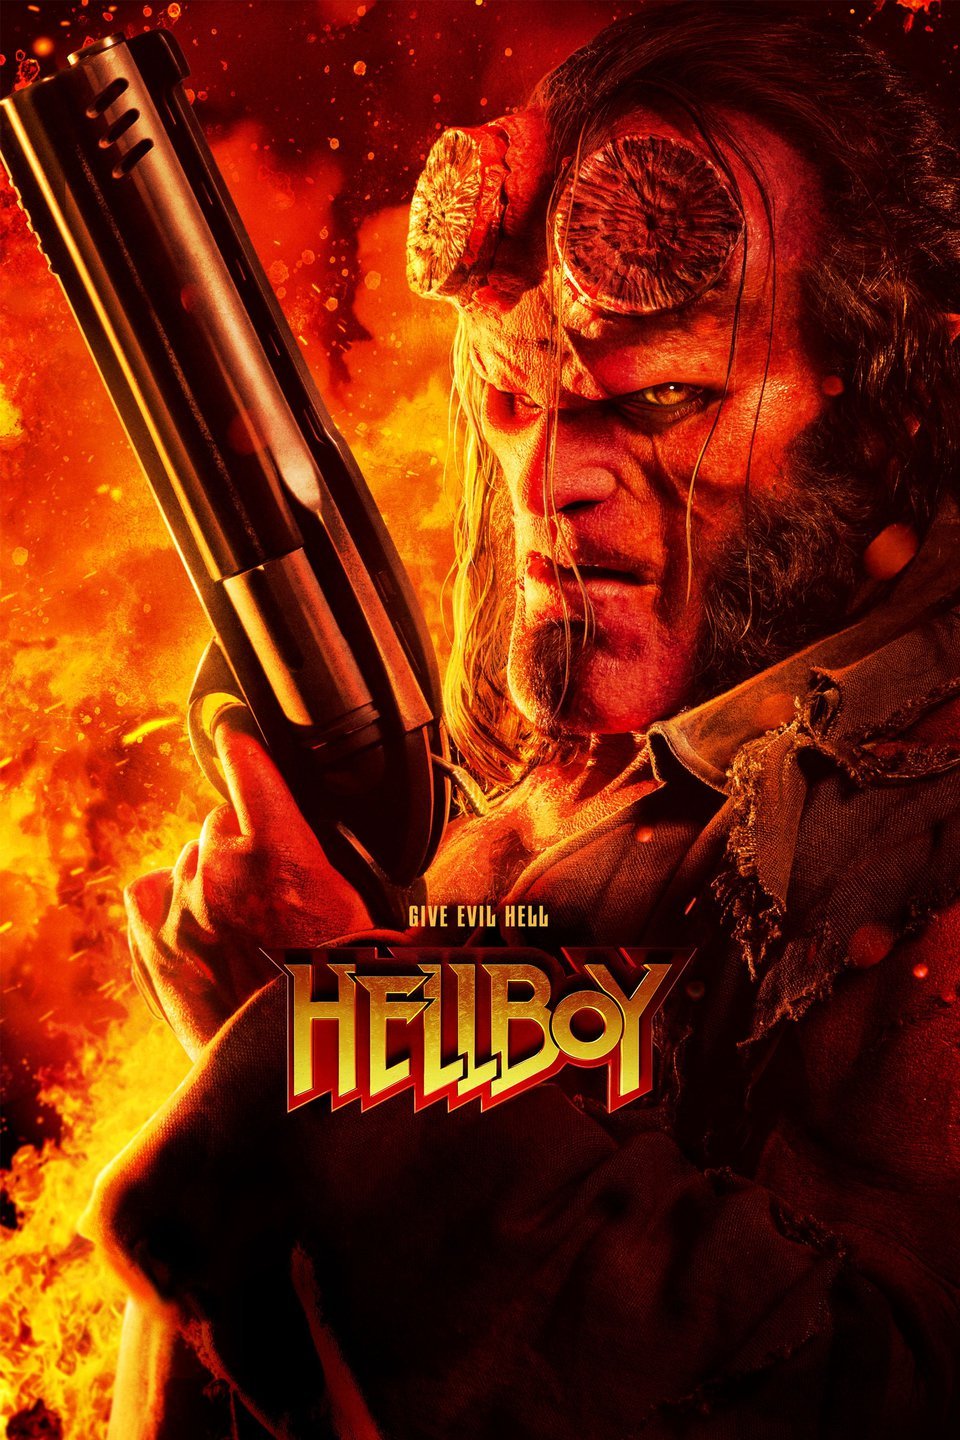 [MINI Super-HQ] Hellboy (2019) เฮลล์บอย [1080p] [พากย์ไทย 5.1 + เสียงอังกฤษ DTS] [บรรยายไทย + อังกฤษ] [เสียงไทย + ซับไทย] [OPENLOAD]